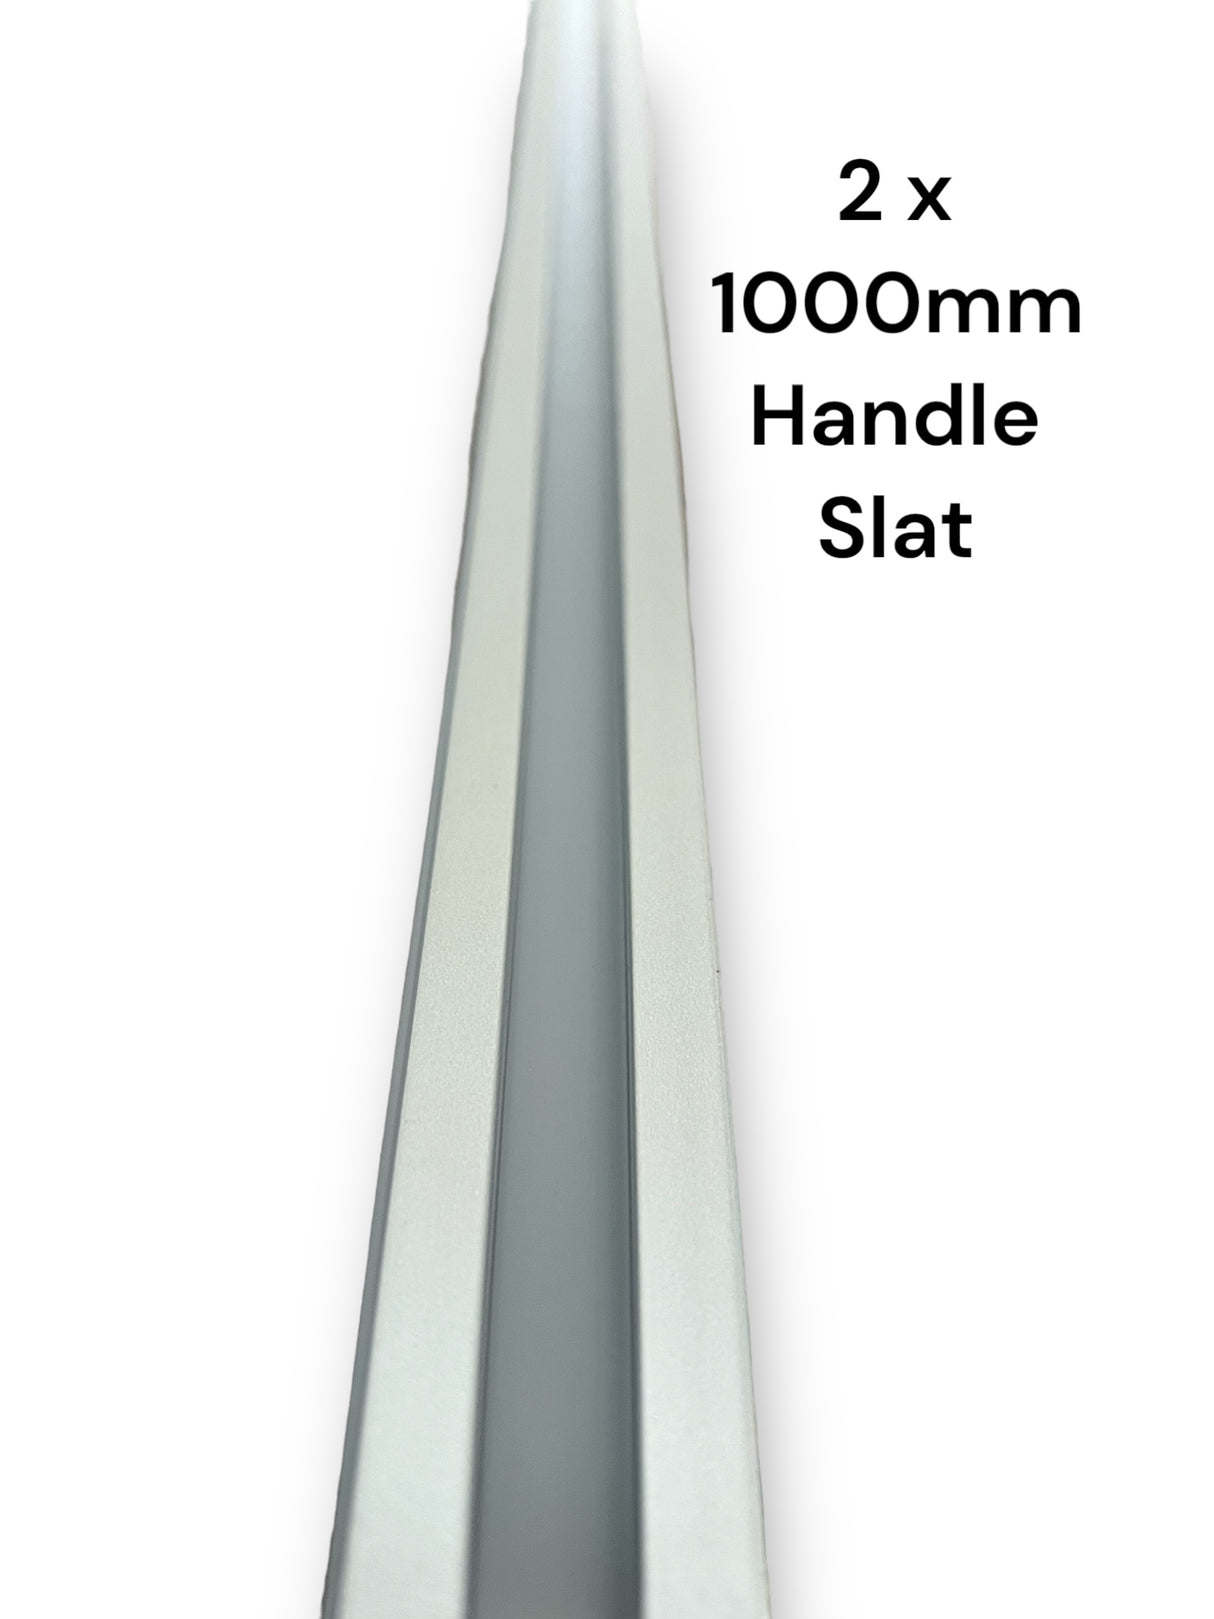 TAMdoûr Universal - Easy Cut Tambour Vertical or Horizontal Sliding Door kits, Covering 1000mm x 1000mm Area